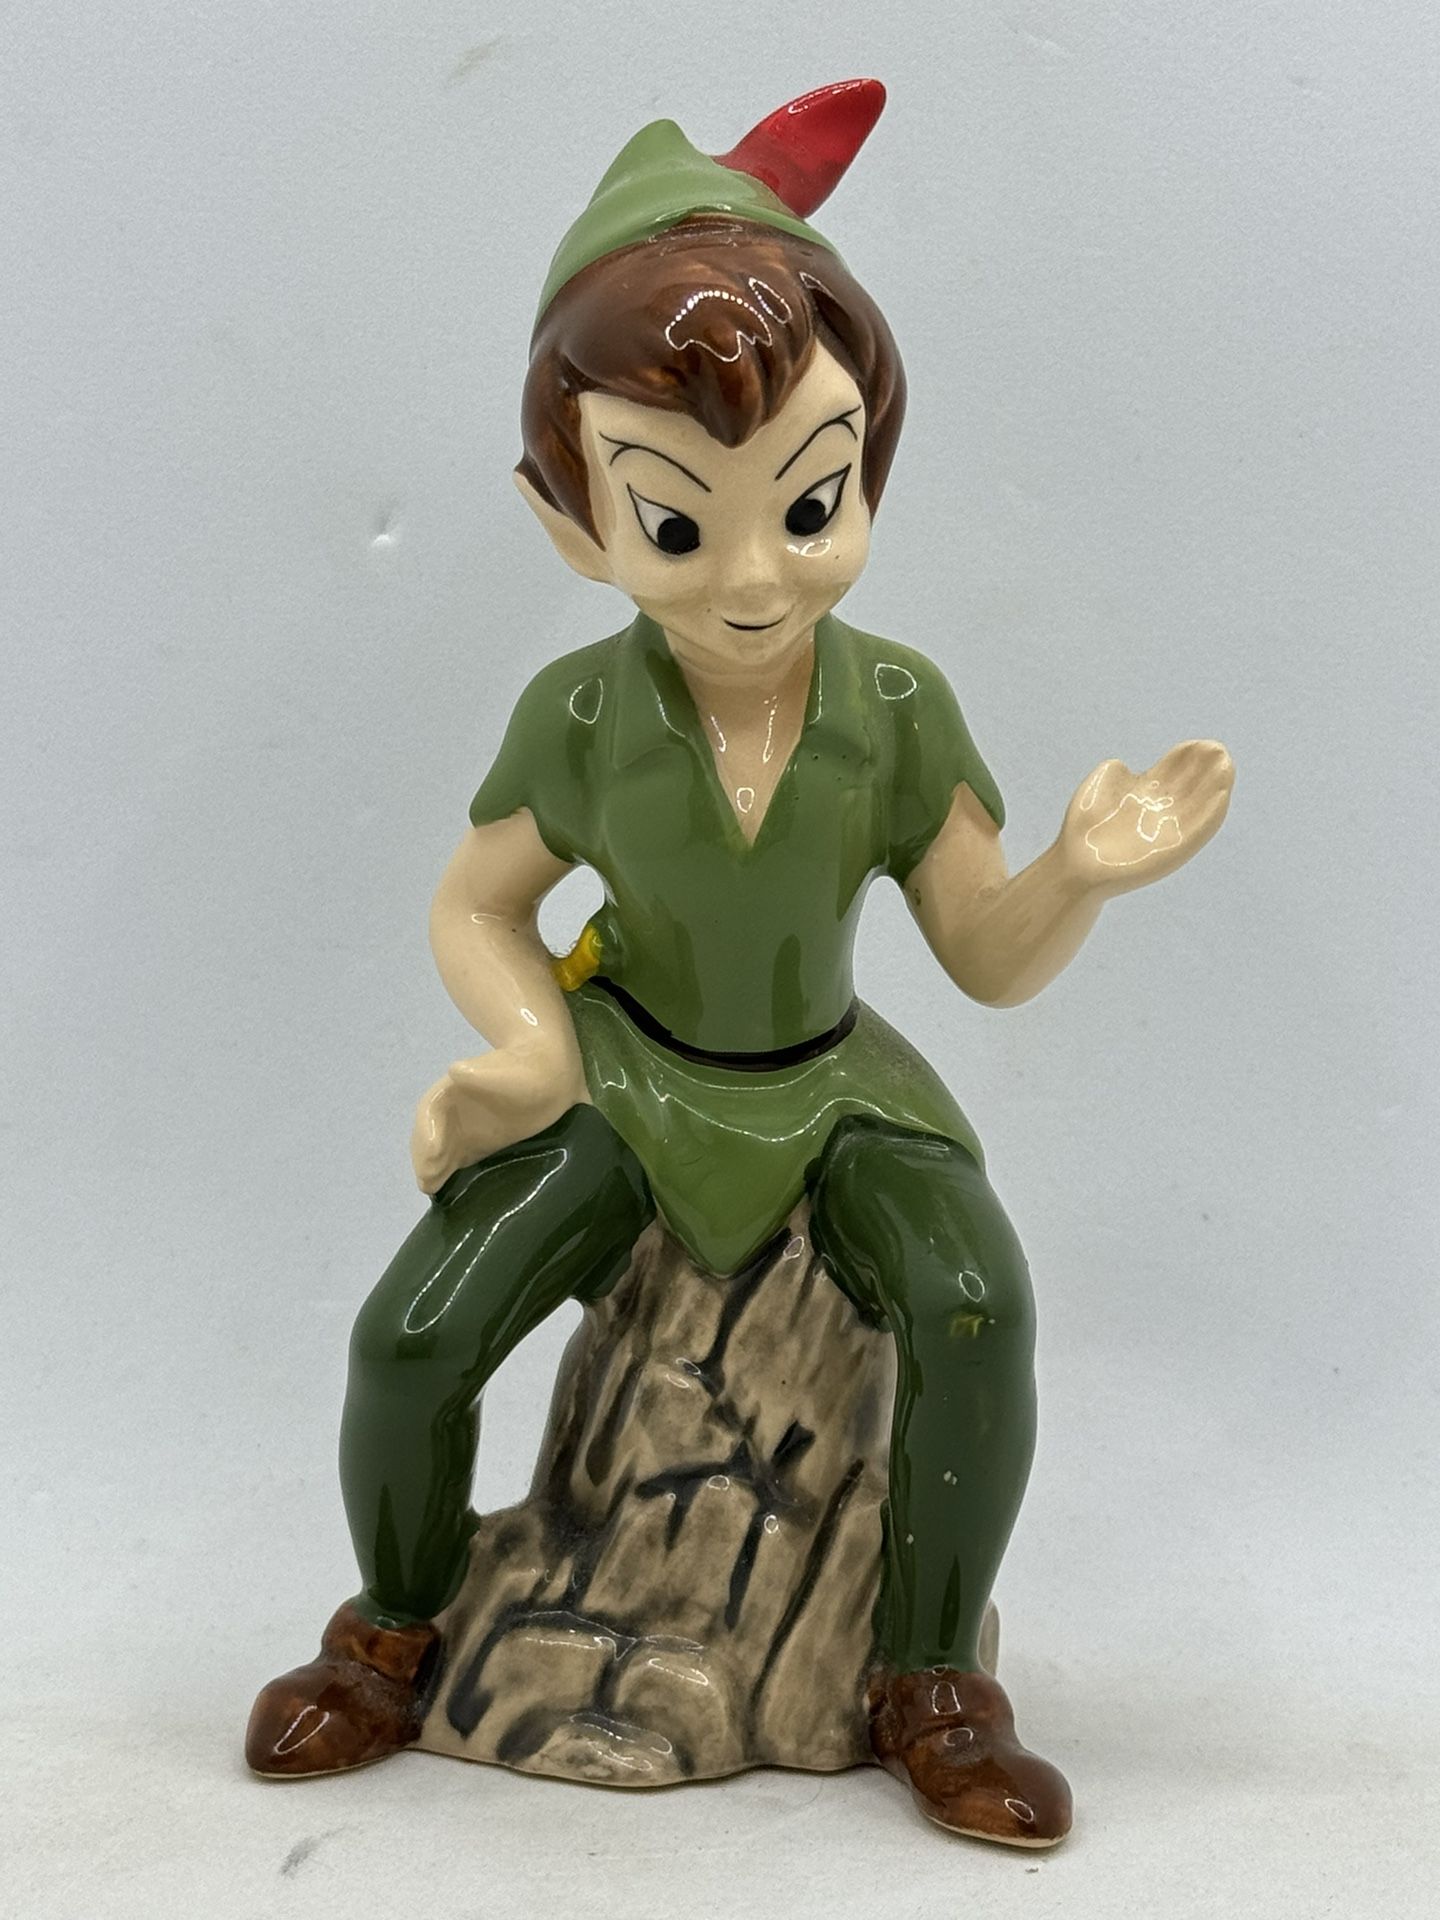 Vintage Pinocchio Ceramic Figure Walt Disney Productions Japan. 5” tall no chips or cracks.